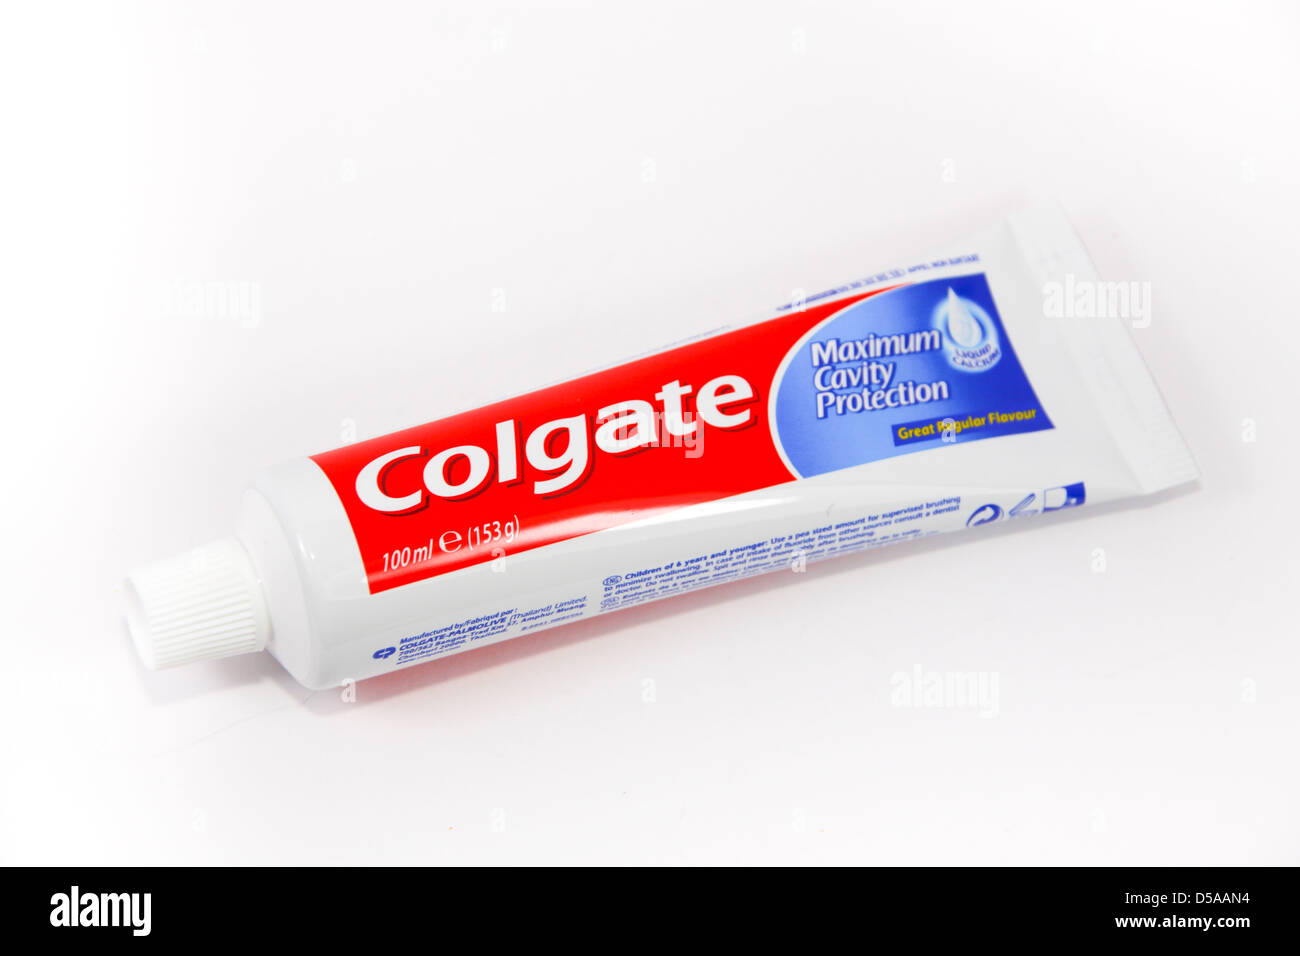 Tubo de pasta dental Colgate Fotografía de stock - Alamy